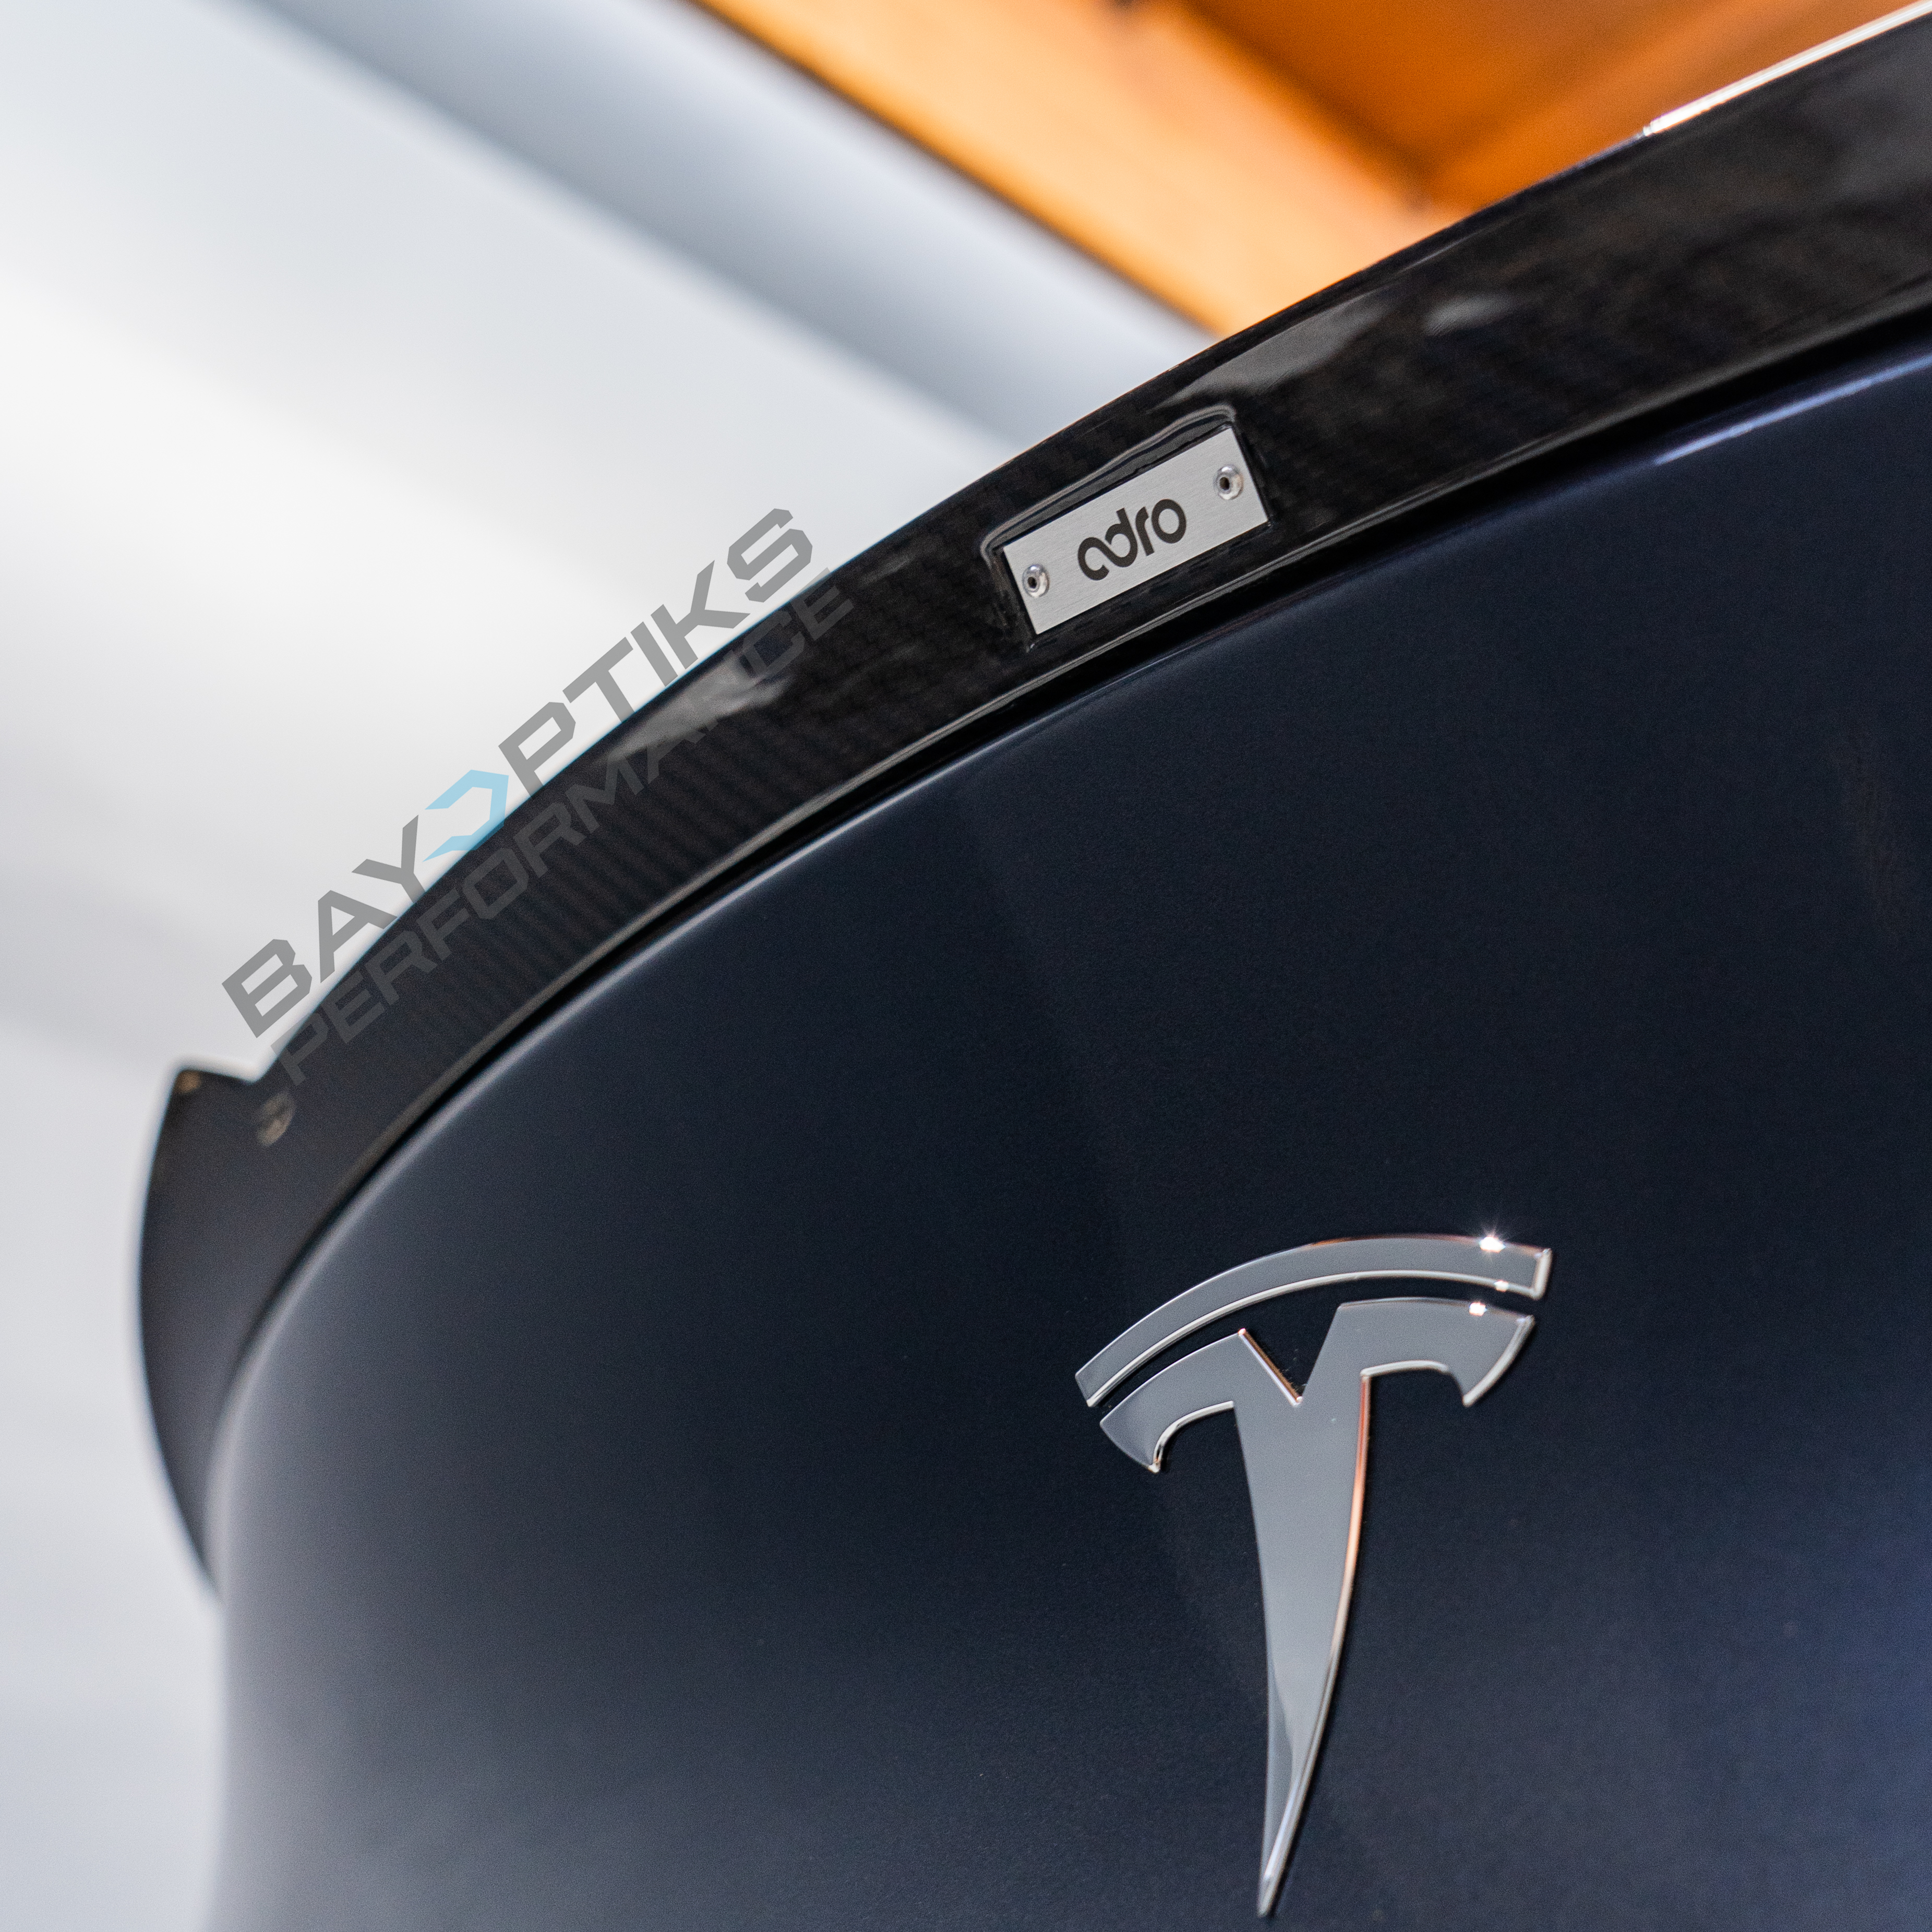 Adro Tesla Model Y Premium Prepeg Carbon Fiber Spoiler